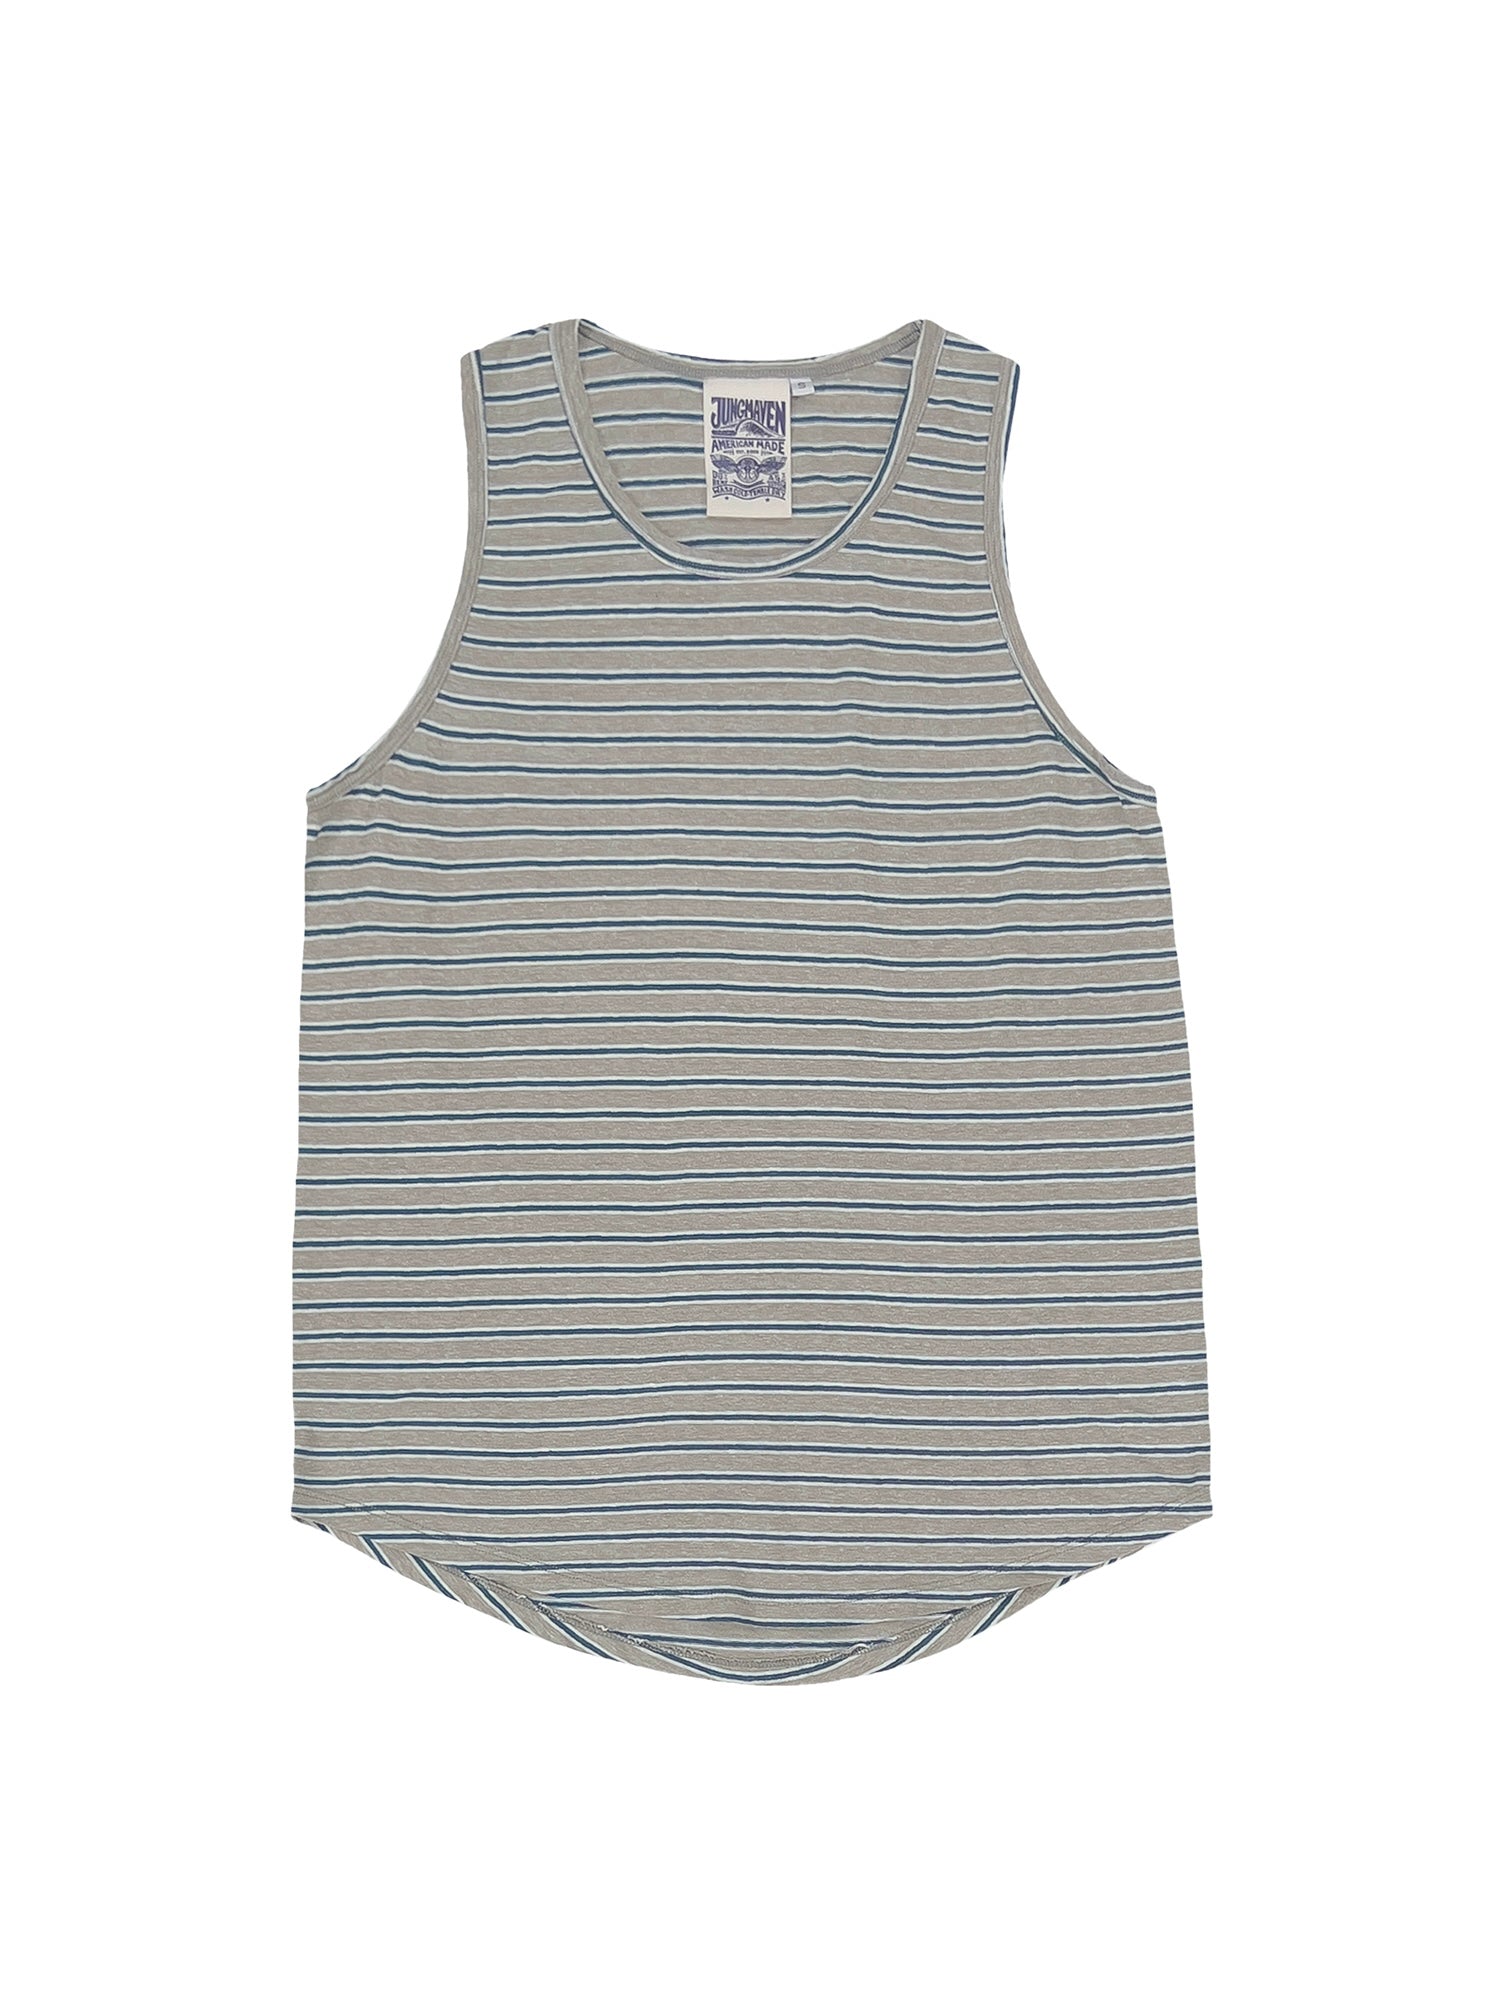 Stripe Tank Top | Jungmaven Hemp Clothing & Accessories / Color:Teal/White/ Gray Stripe